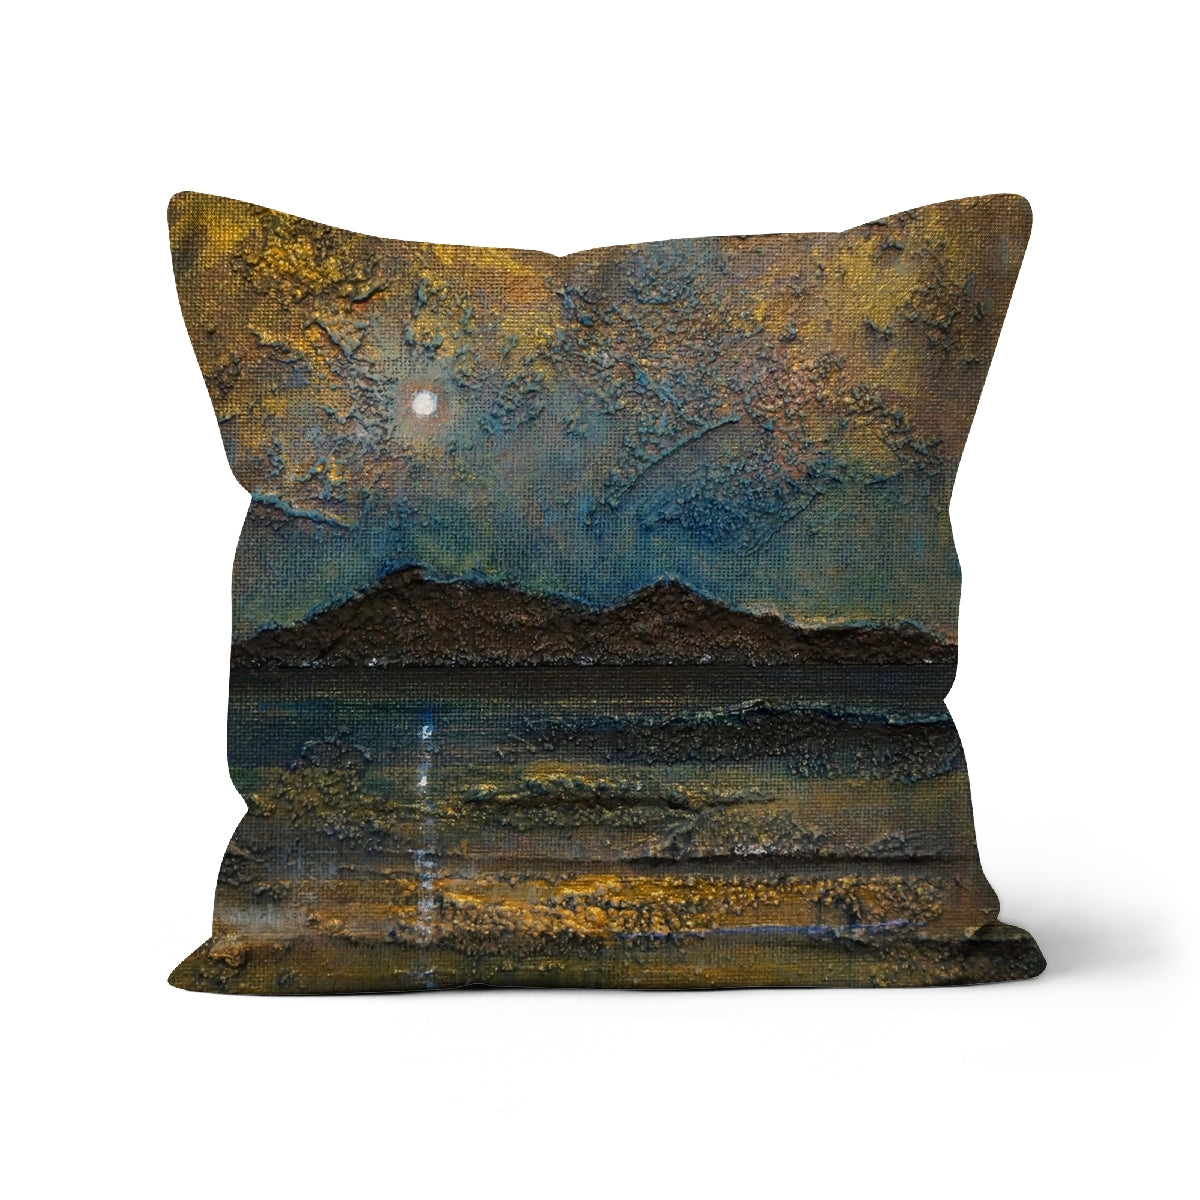 Arran Moonlight Art Gifts Cushion-Cushions-Arran Art Gallery-Linen-12"x12"-Paintings, Prints, Homeware, Art Gifts From Scotland By Scottish Artist Kevin Hunter